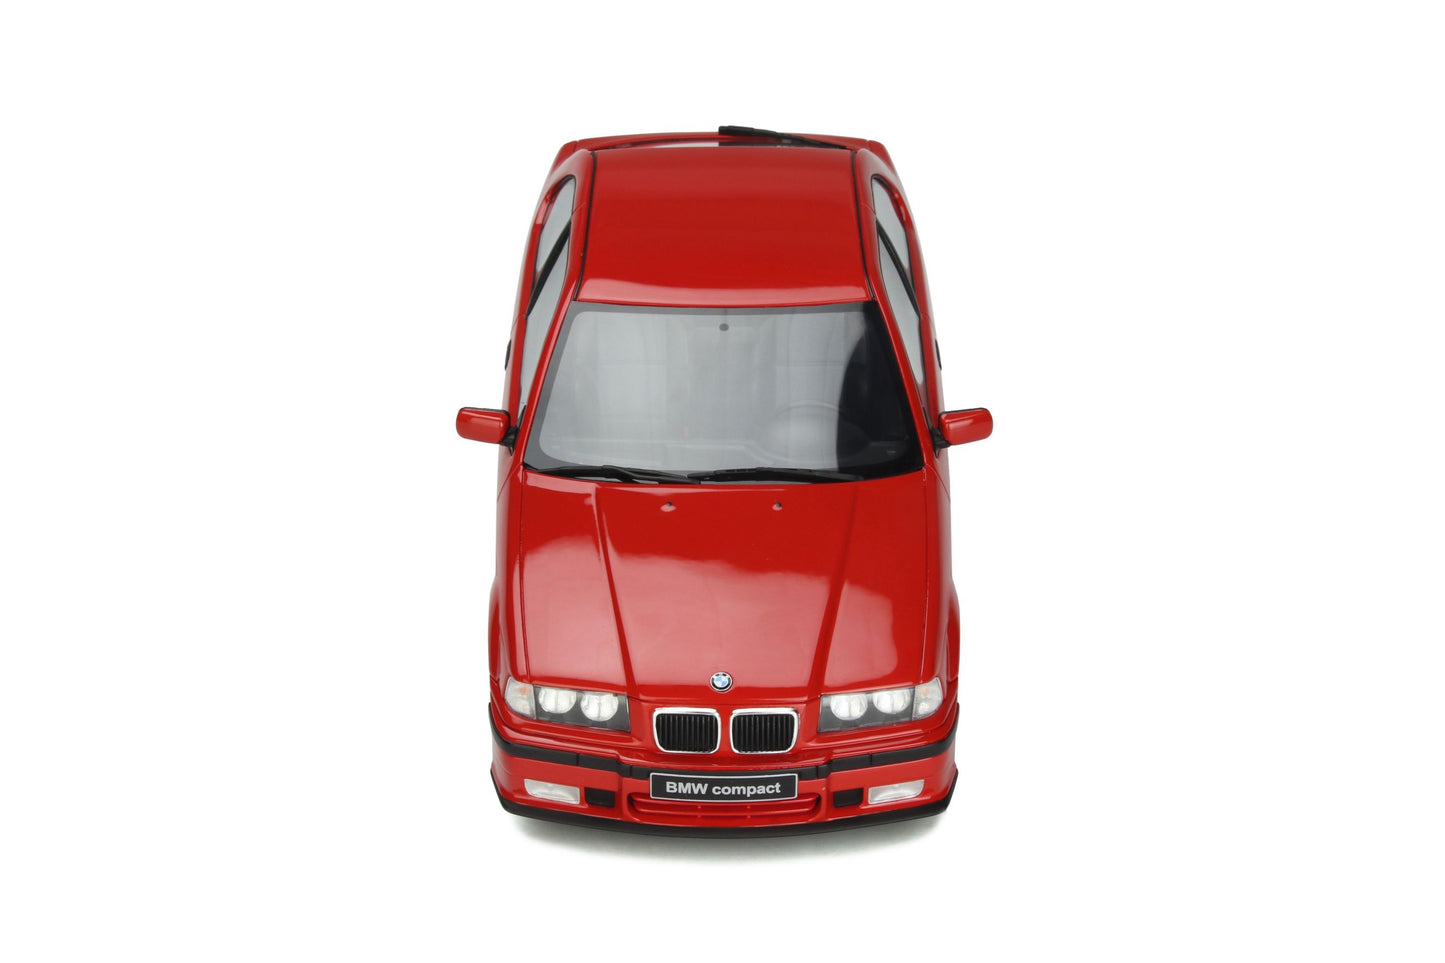 OttOmobile - BMW 318i (E36) Compact (Red) 1:18 Scale Model Car